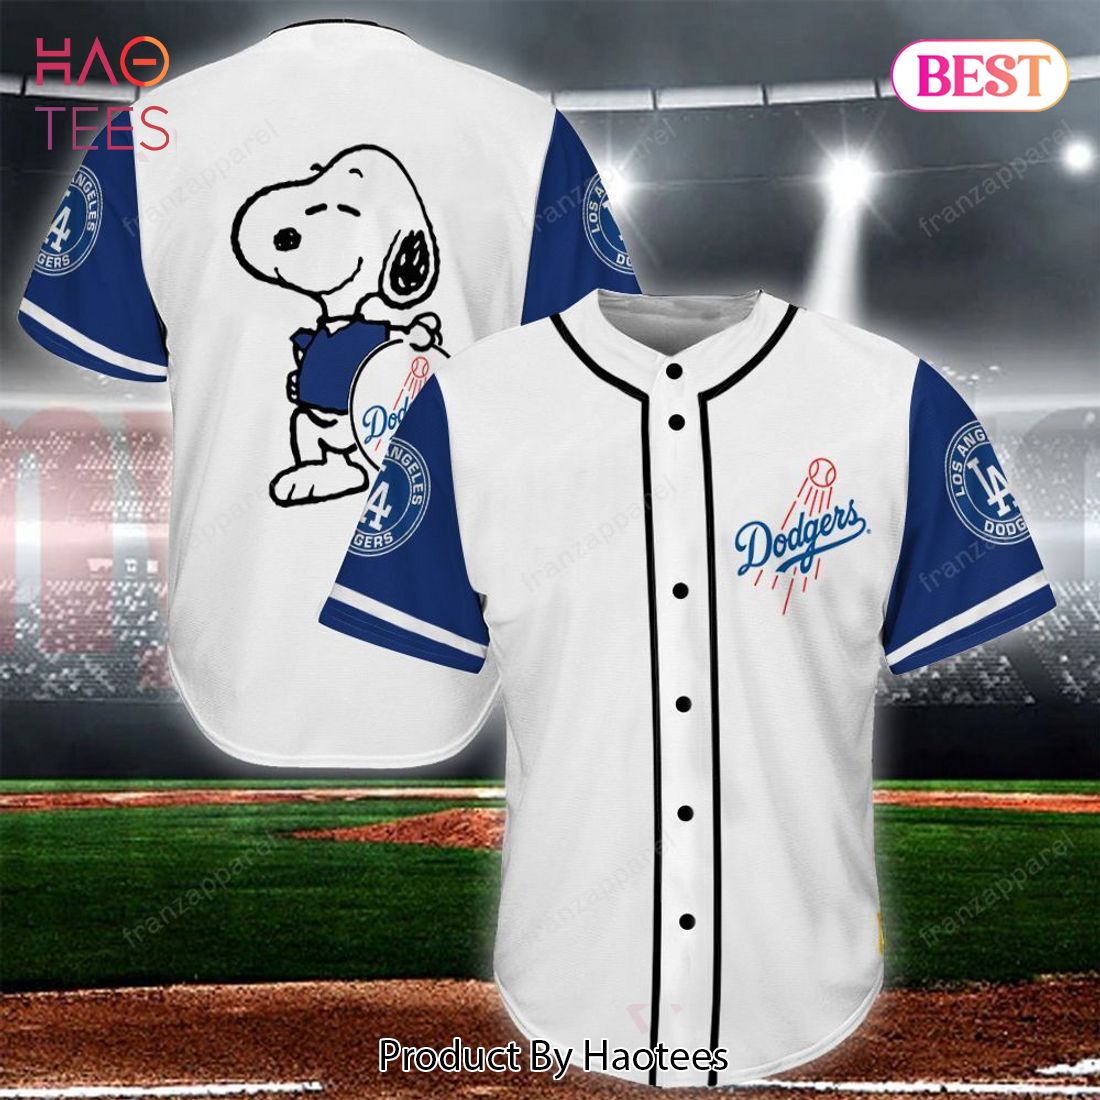 the dodgers baseball jersey